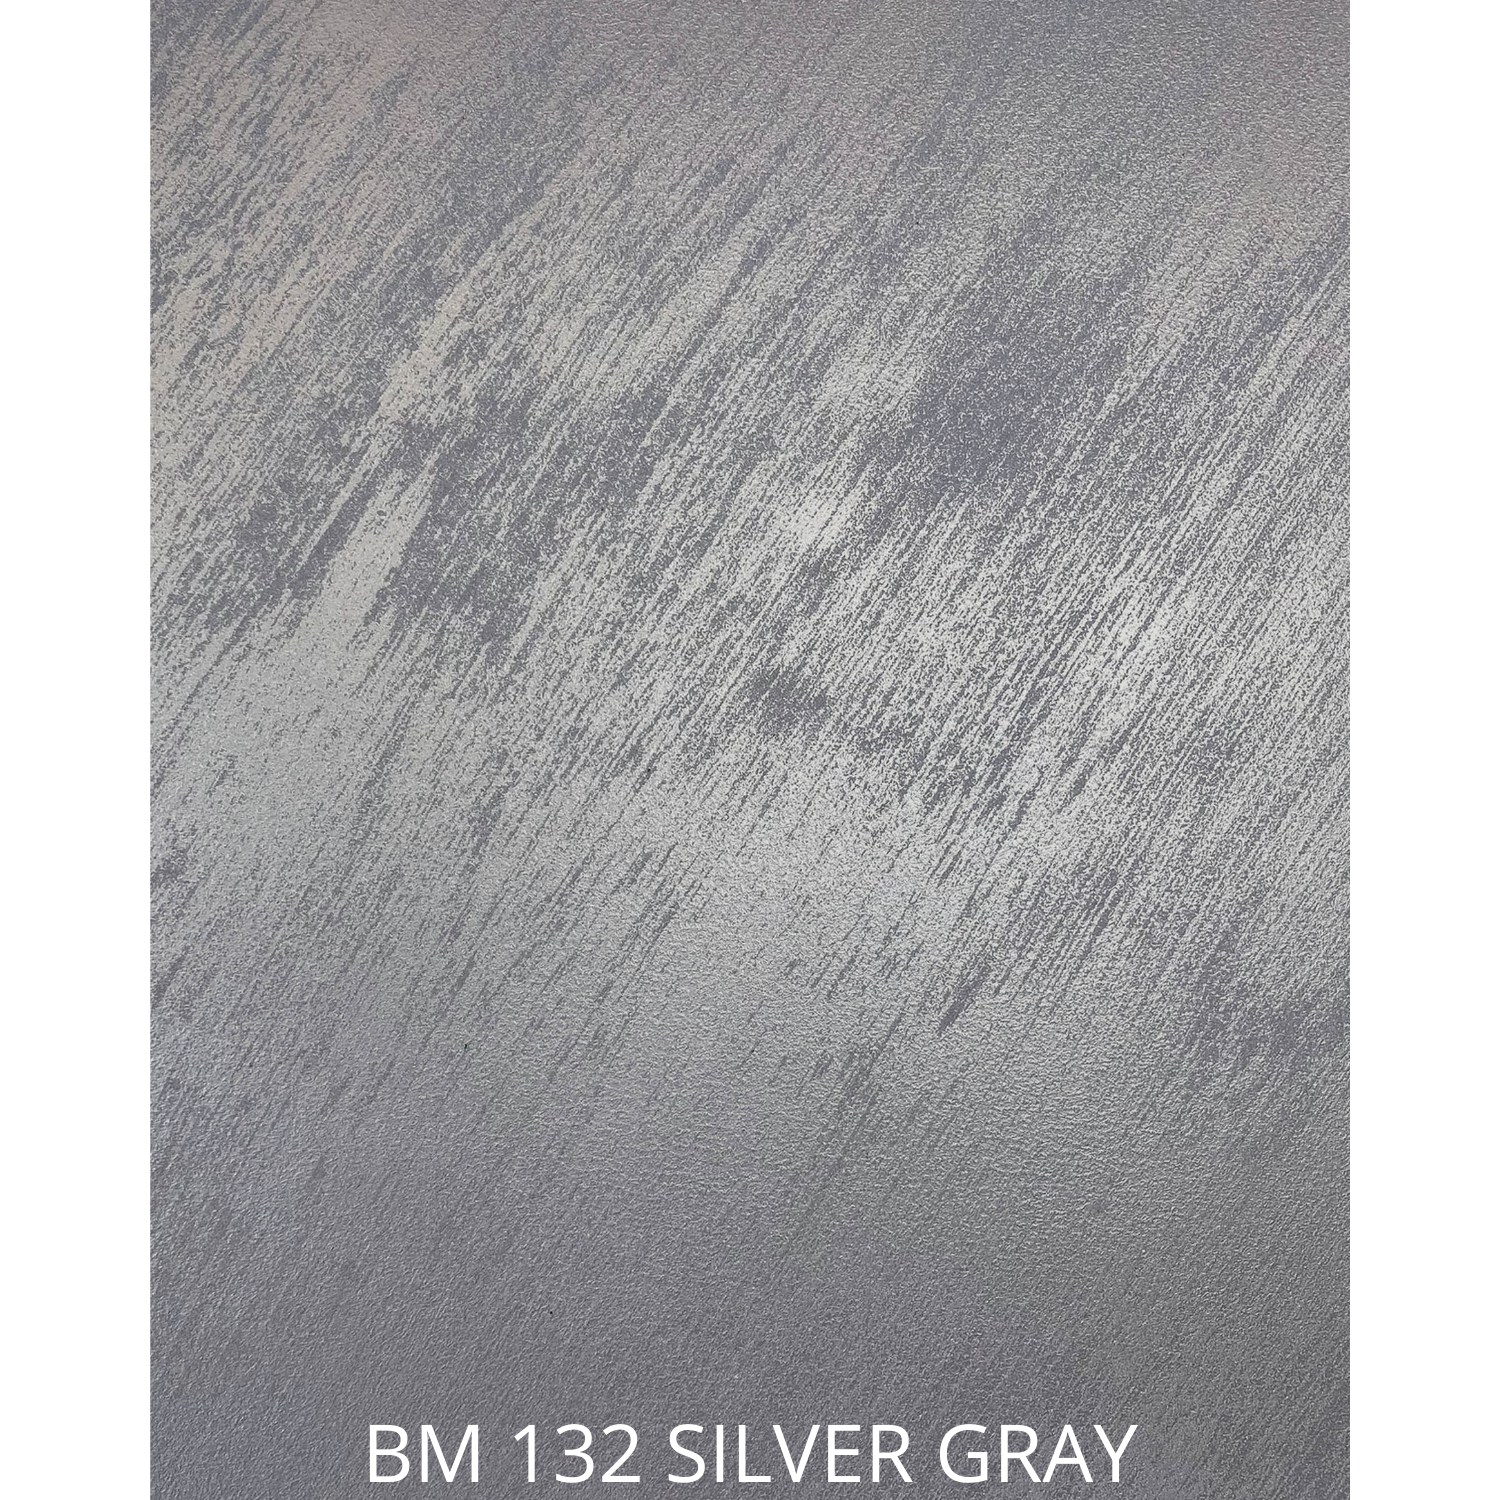 BM 132 SILVER GRAY